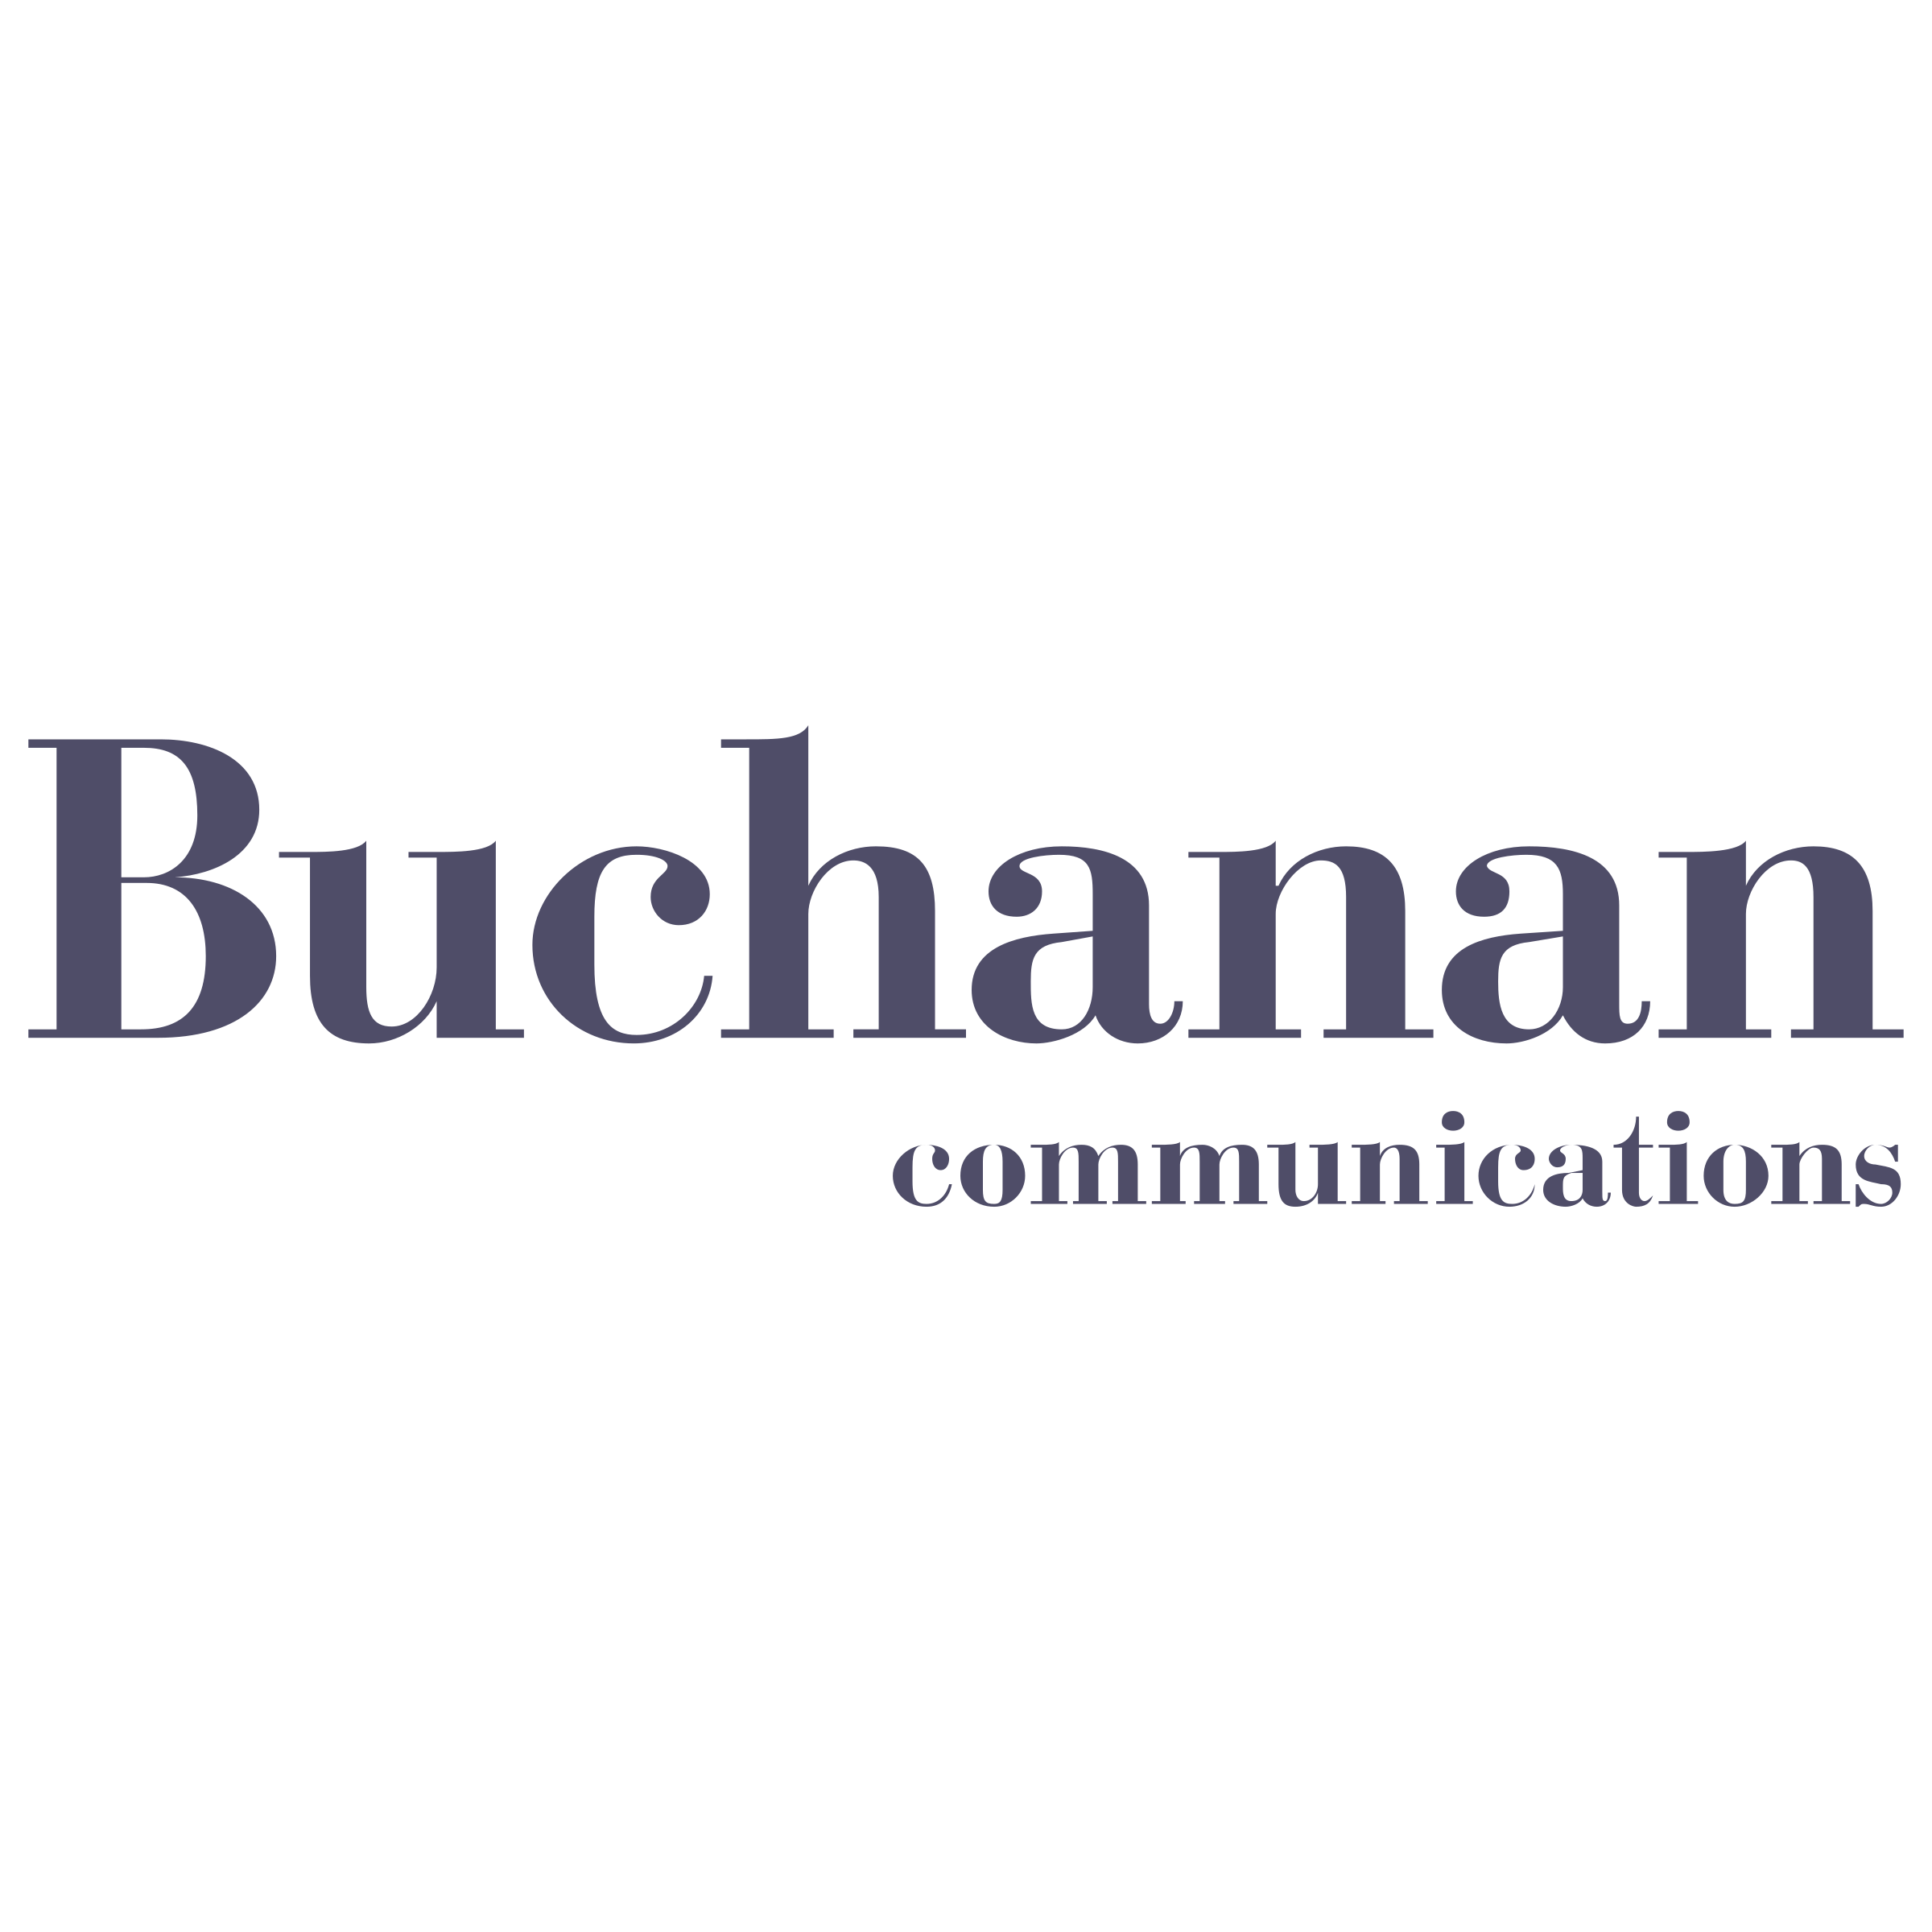 Bucannan Logo - Buchanan Communications Logo PNG Transparent & SVG Vector - Freebie ...